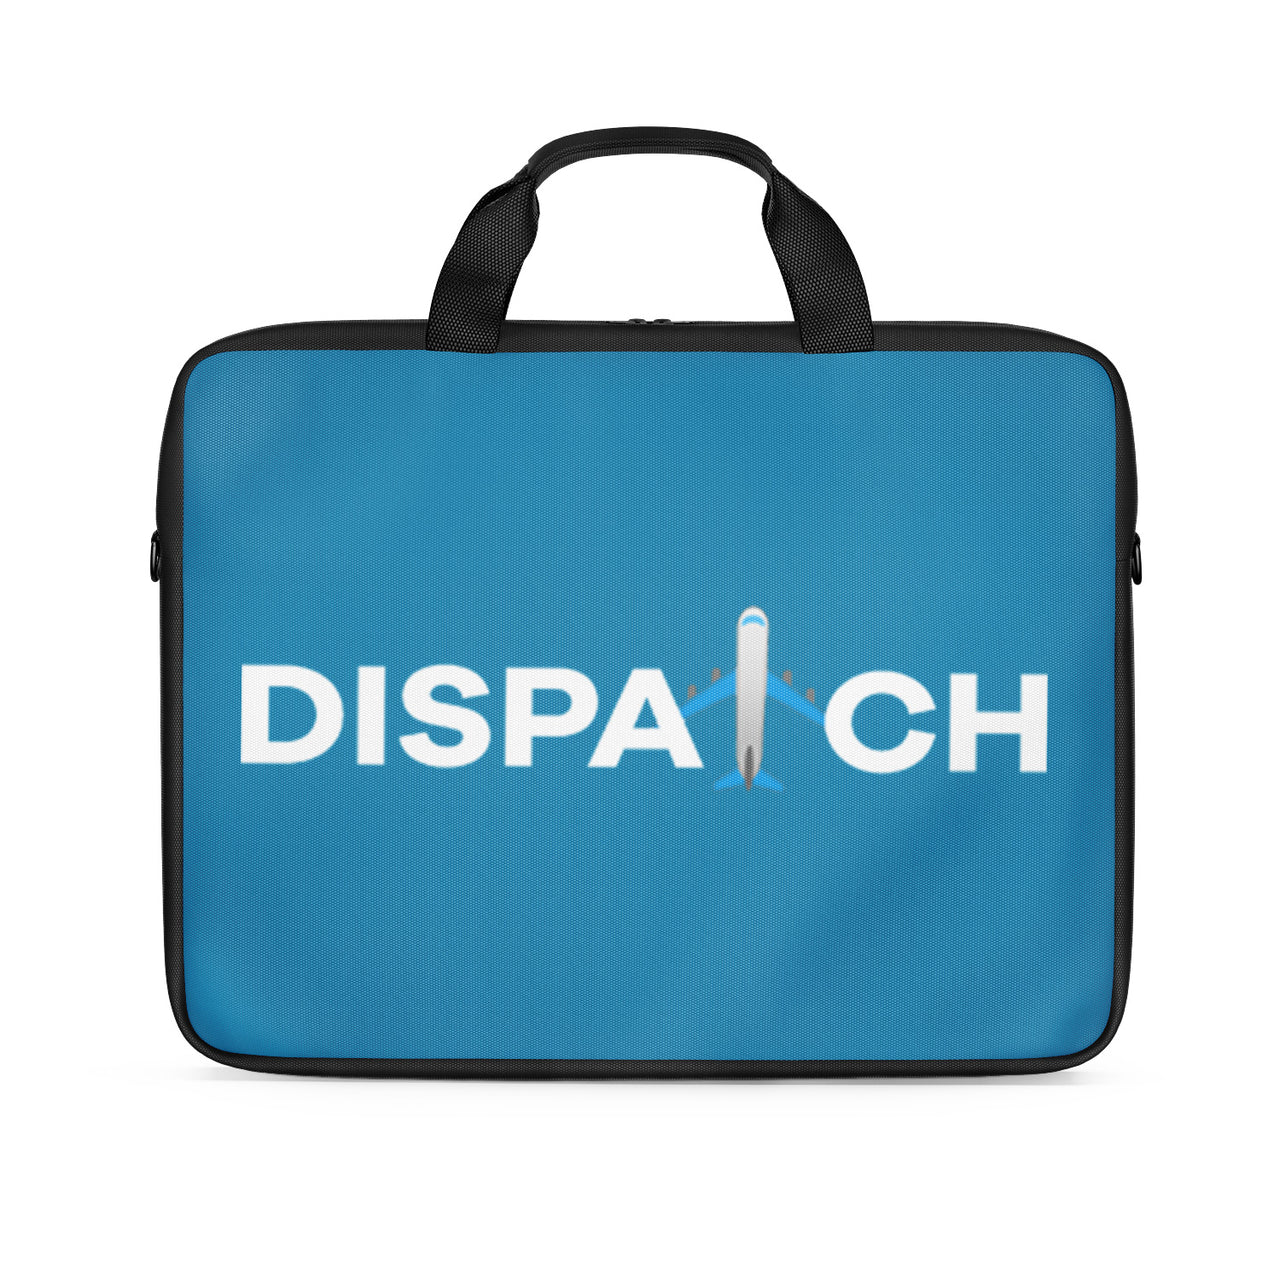 Dispatch Designed Laptop & Tablet Bags